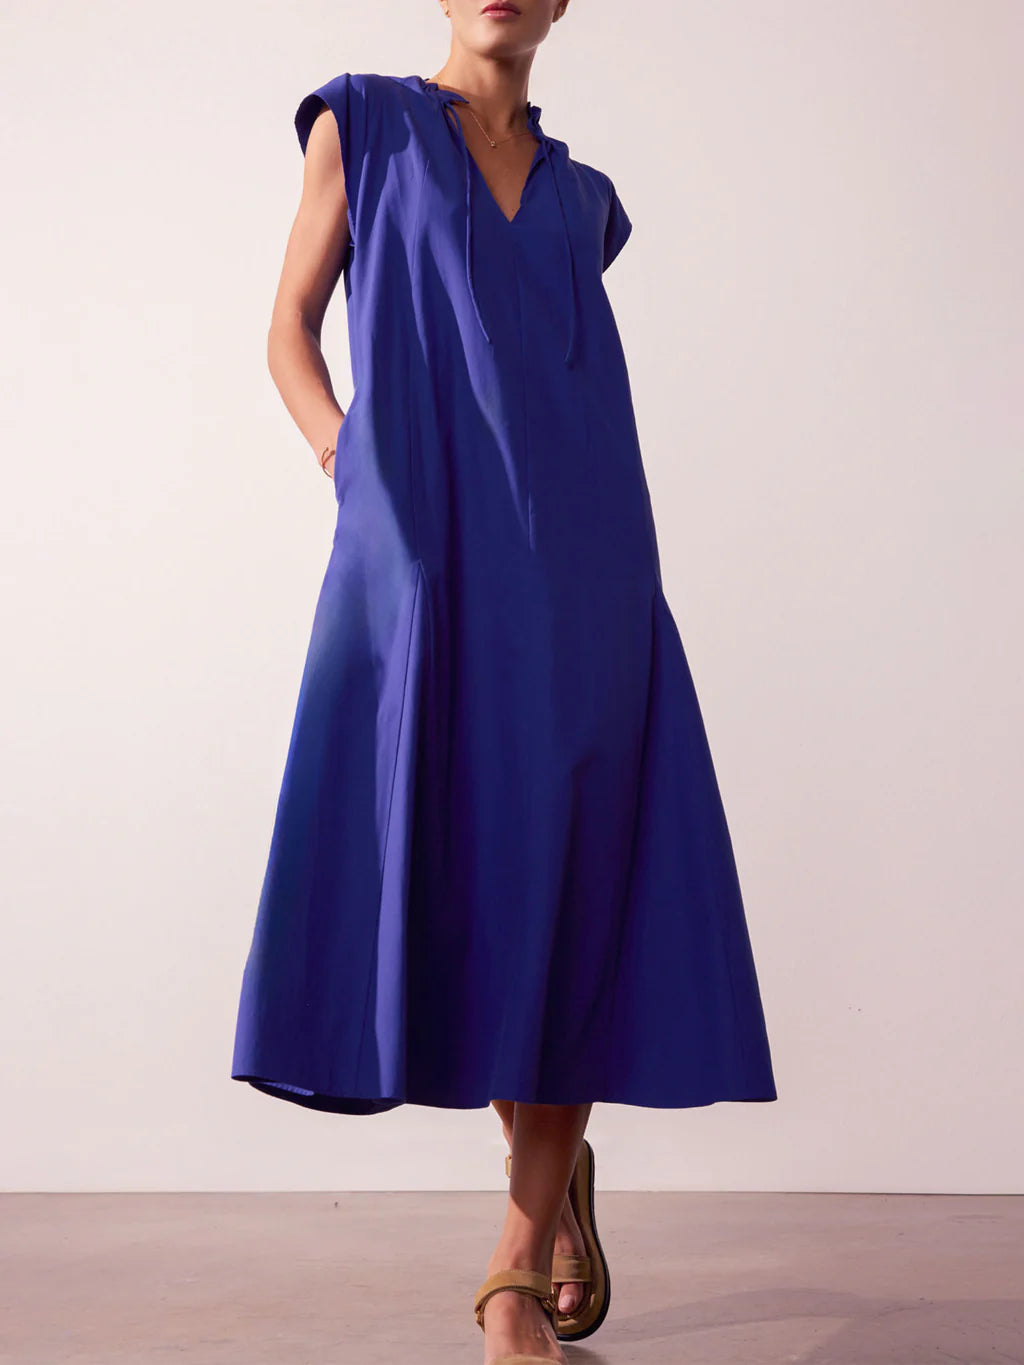 Brochu Walker - Newport Midi Dress in Cobalt